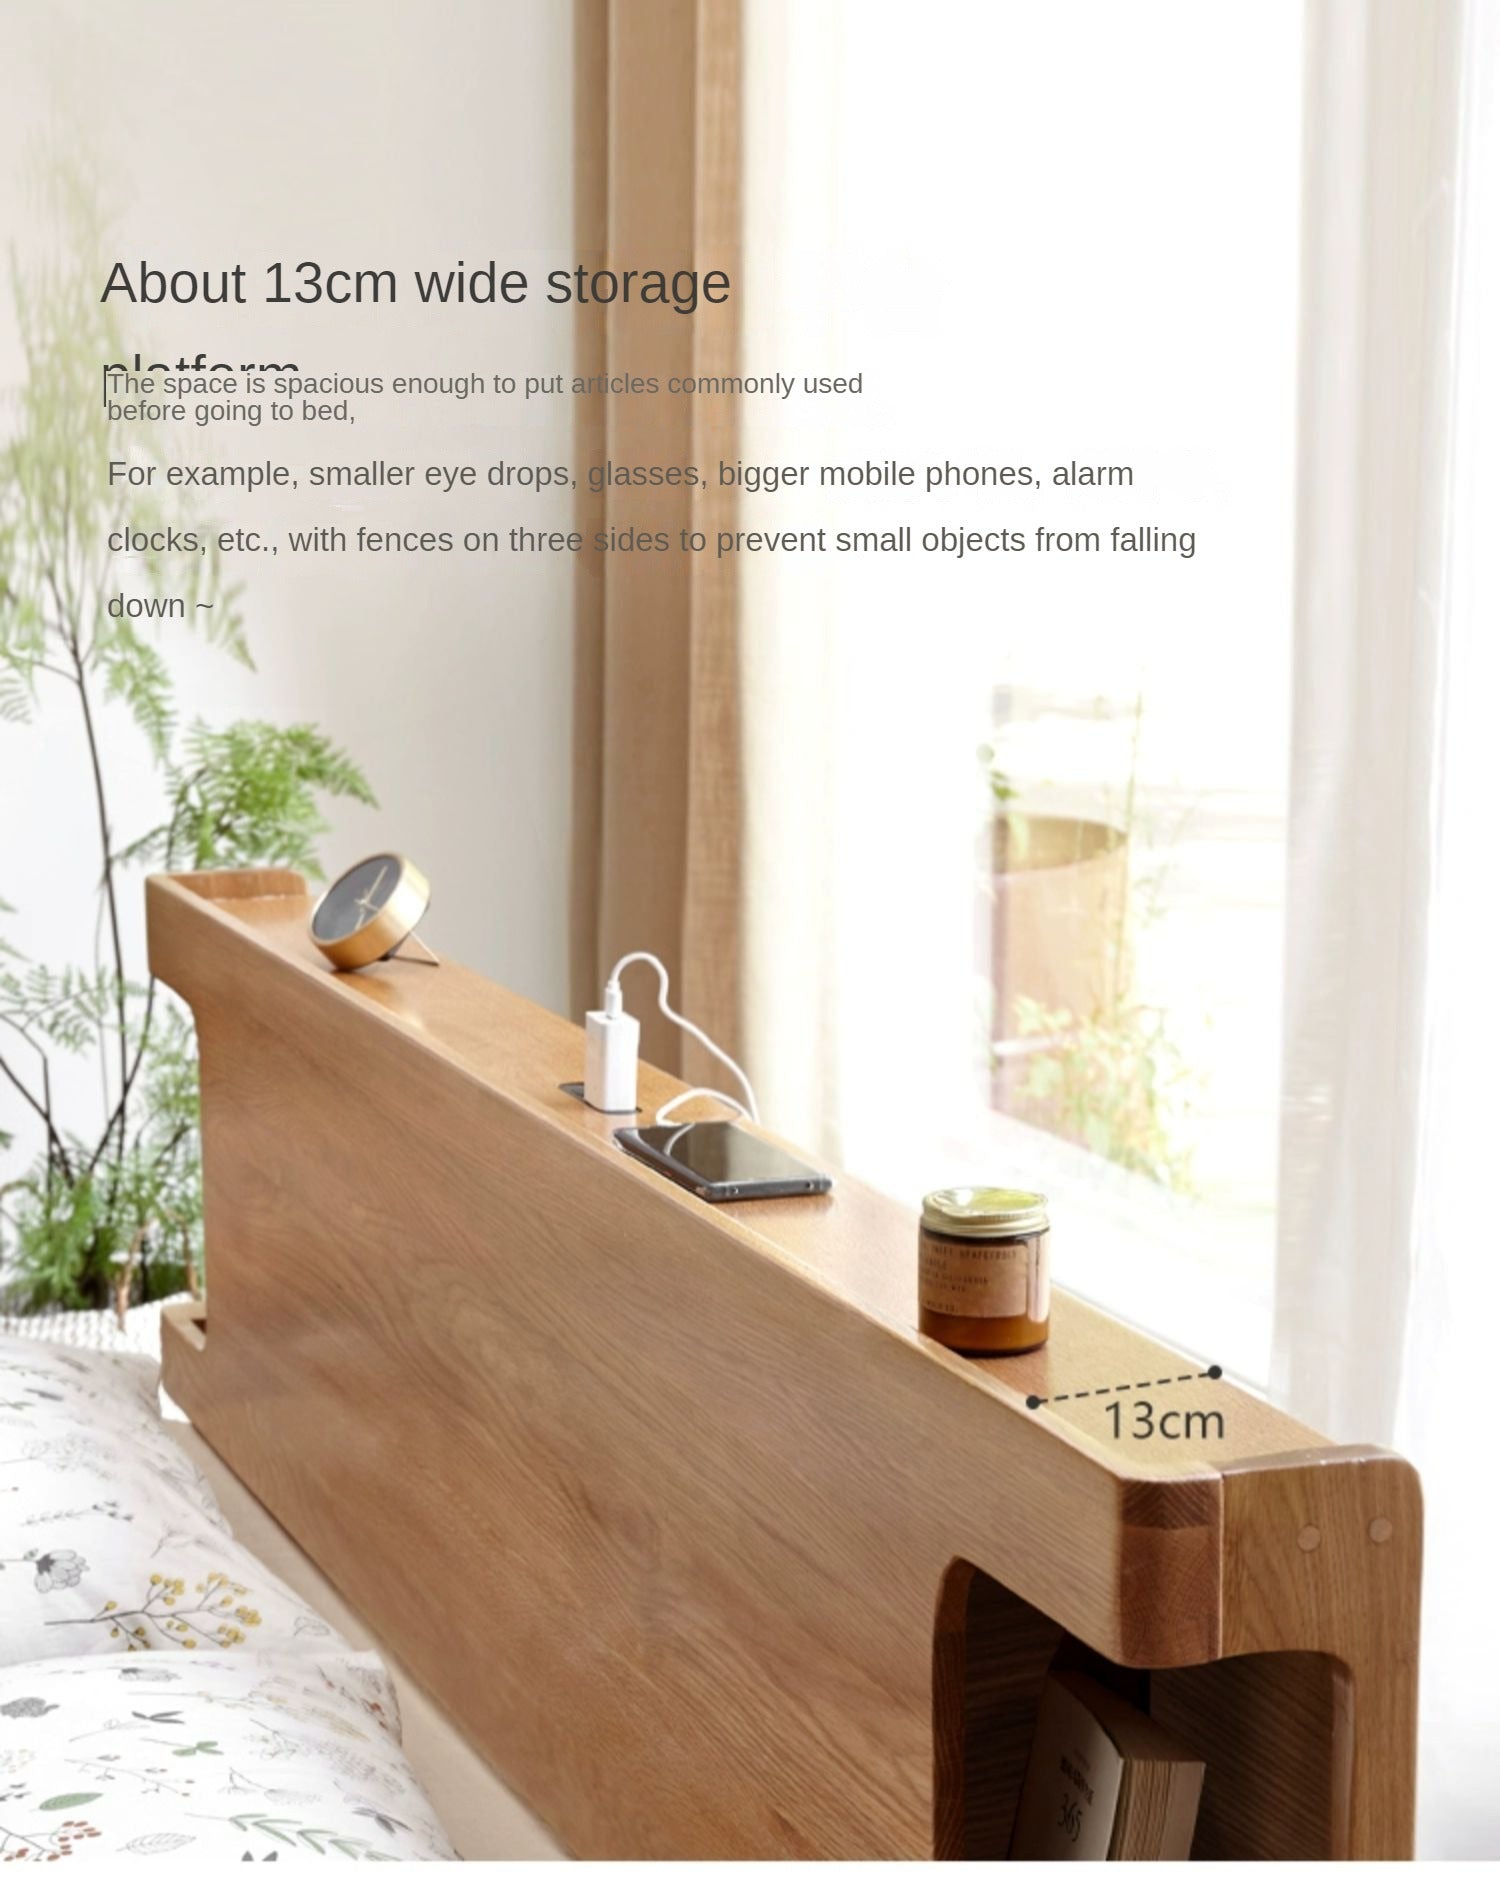 Oak solid wood luminous bed charger, shelf"